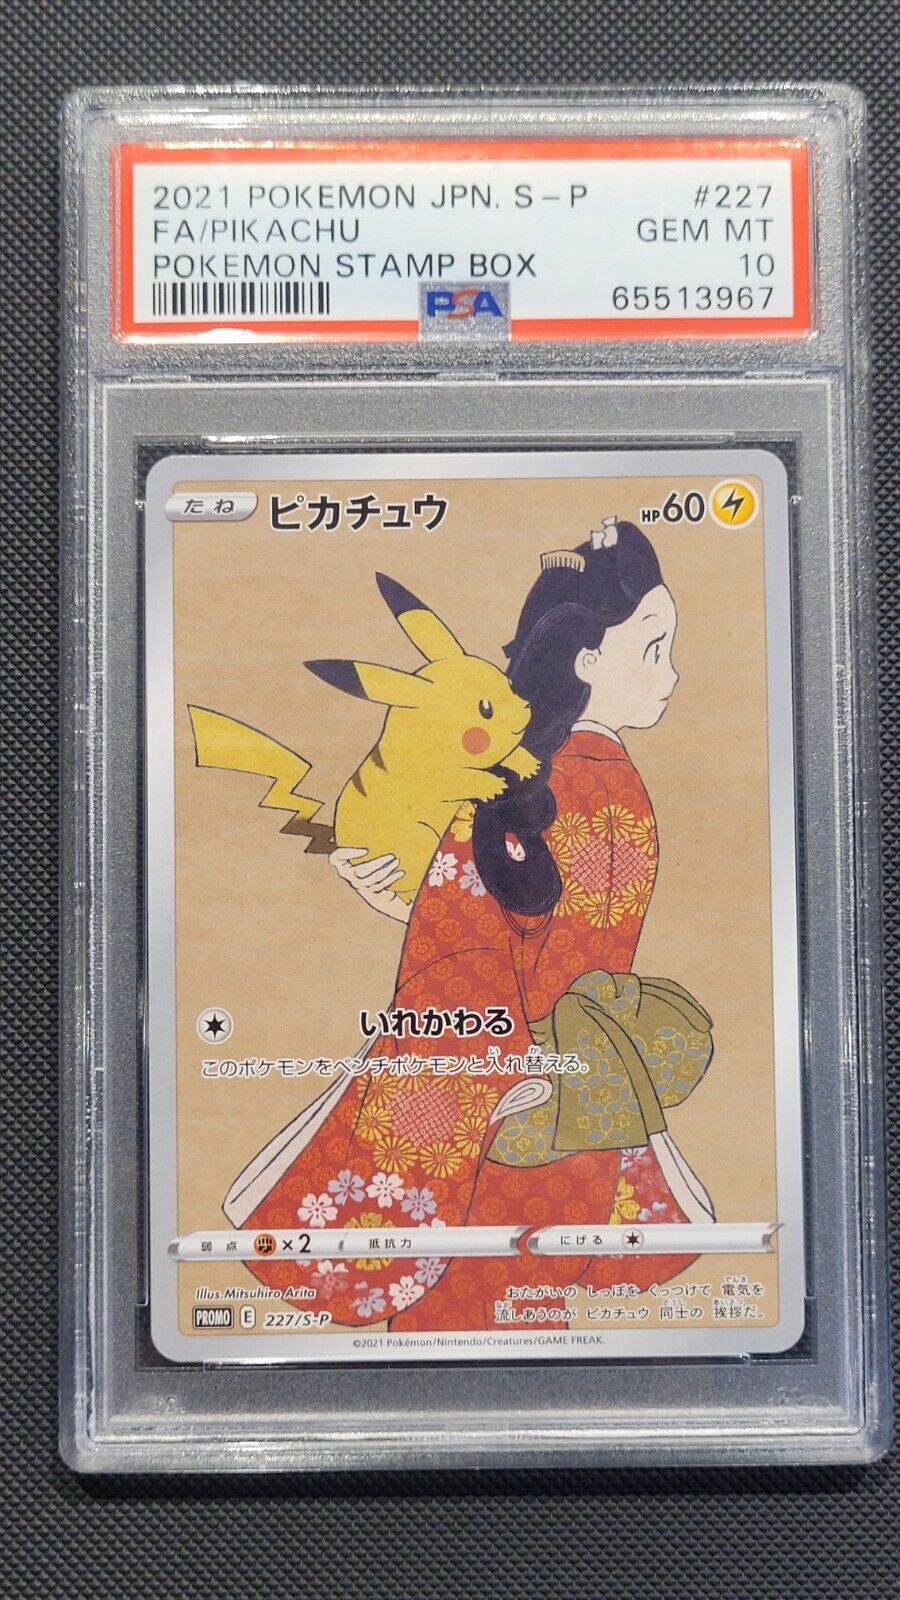 PSA 10 Pikachu Pokemon Stamp BOX POKEMON Japanese S Promo Card 2021 227SP GEM 